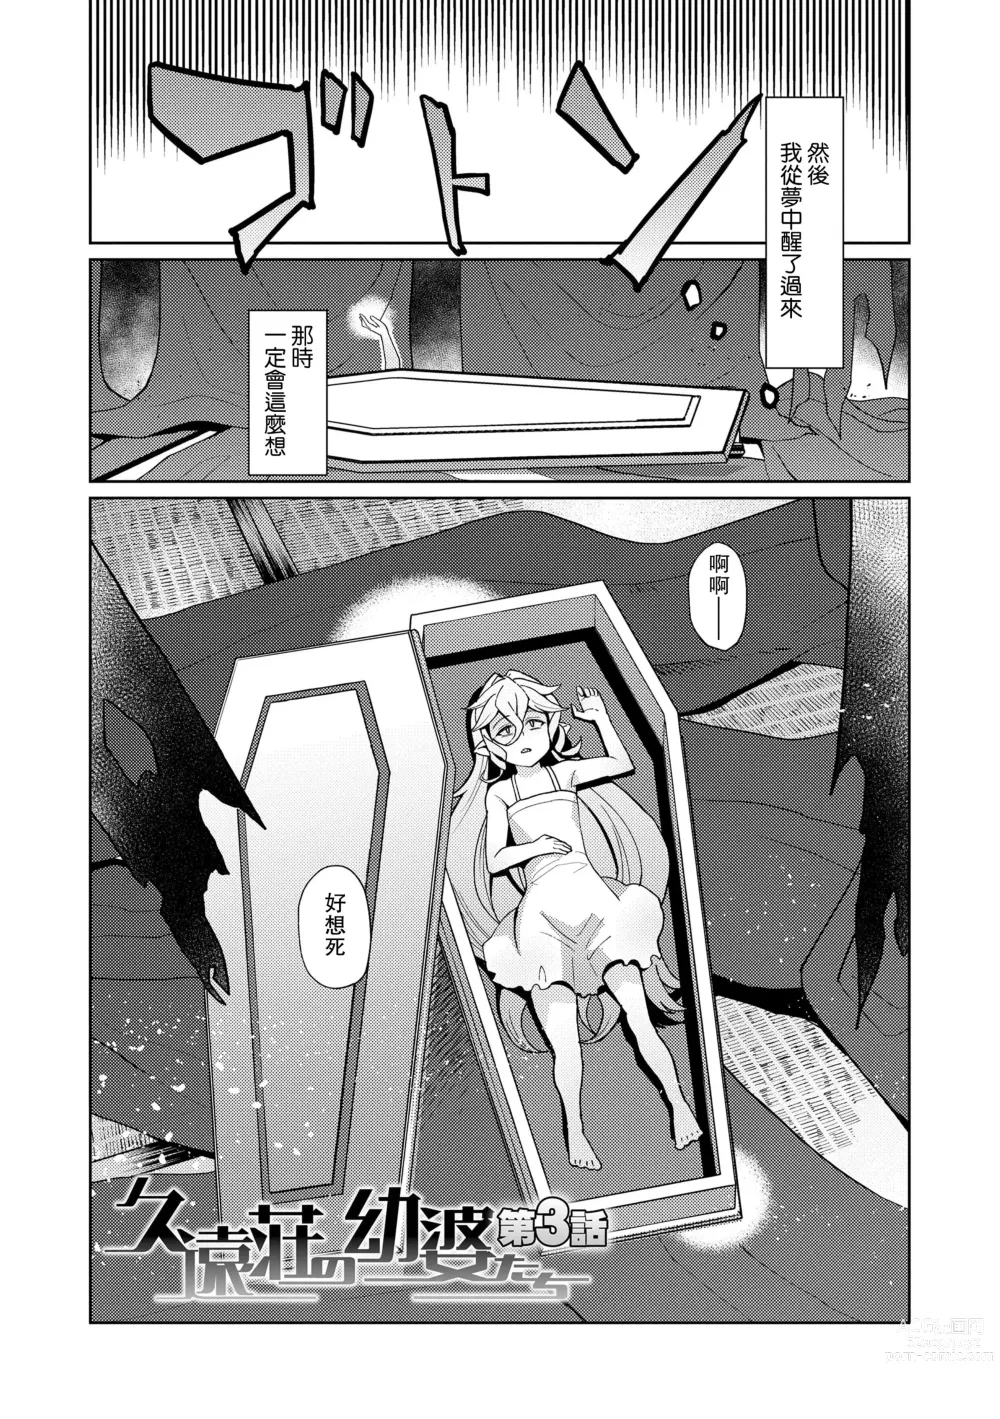 Page 3 of manga Kuon-sou no Youba-tachi Ch. 3